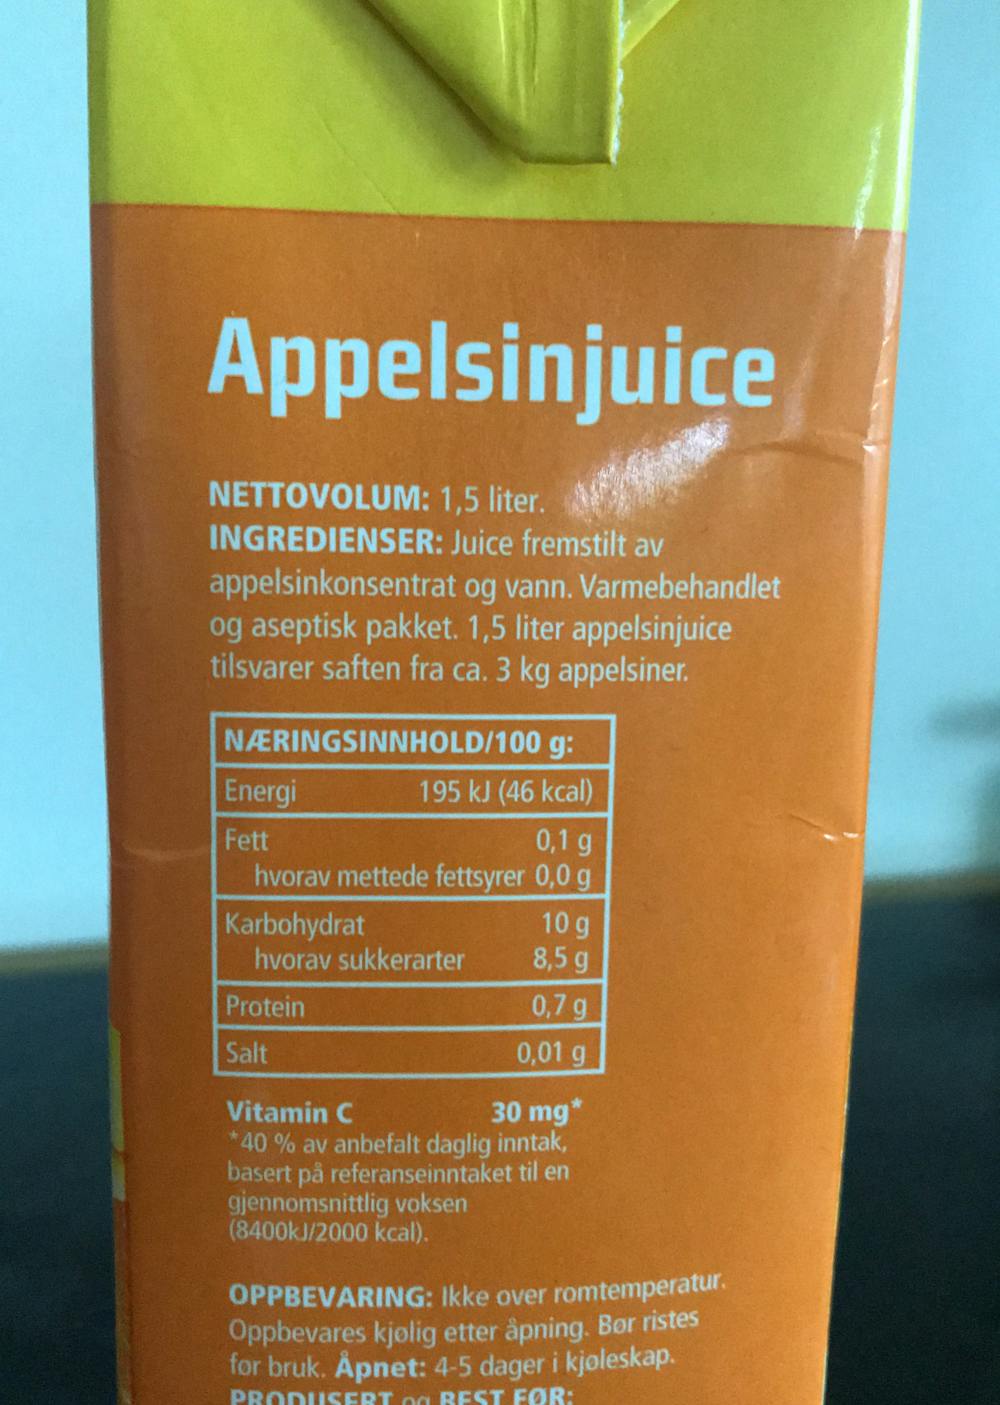 Ingredienslisten til Coop Appelsinjuice